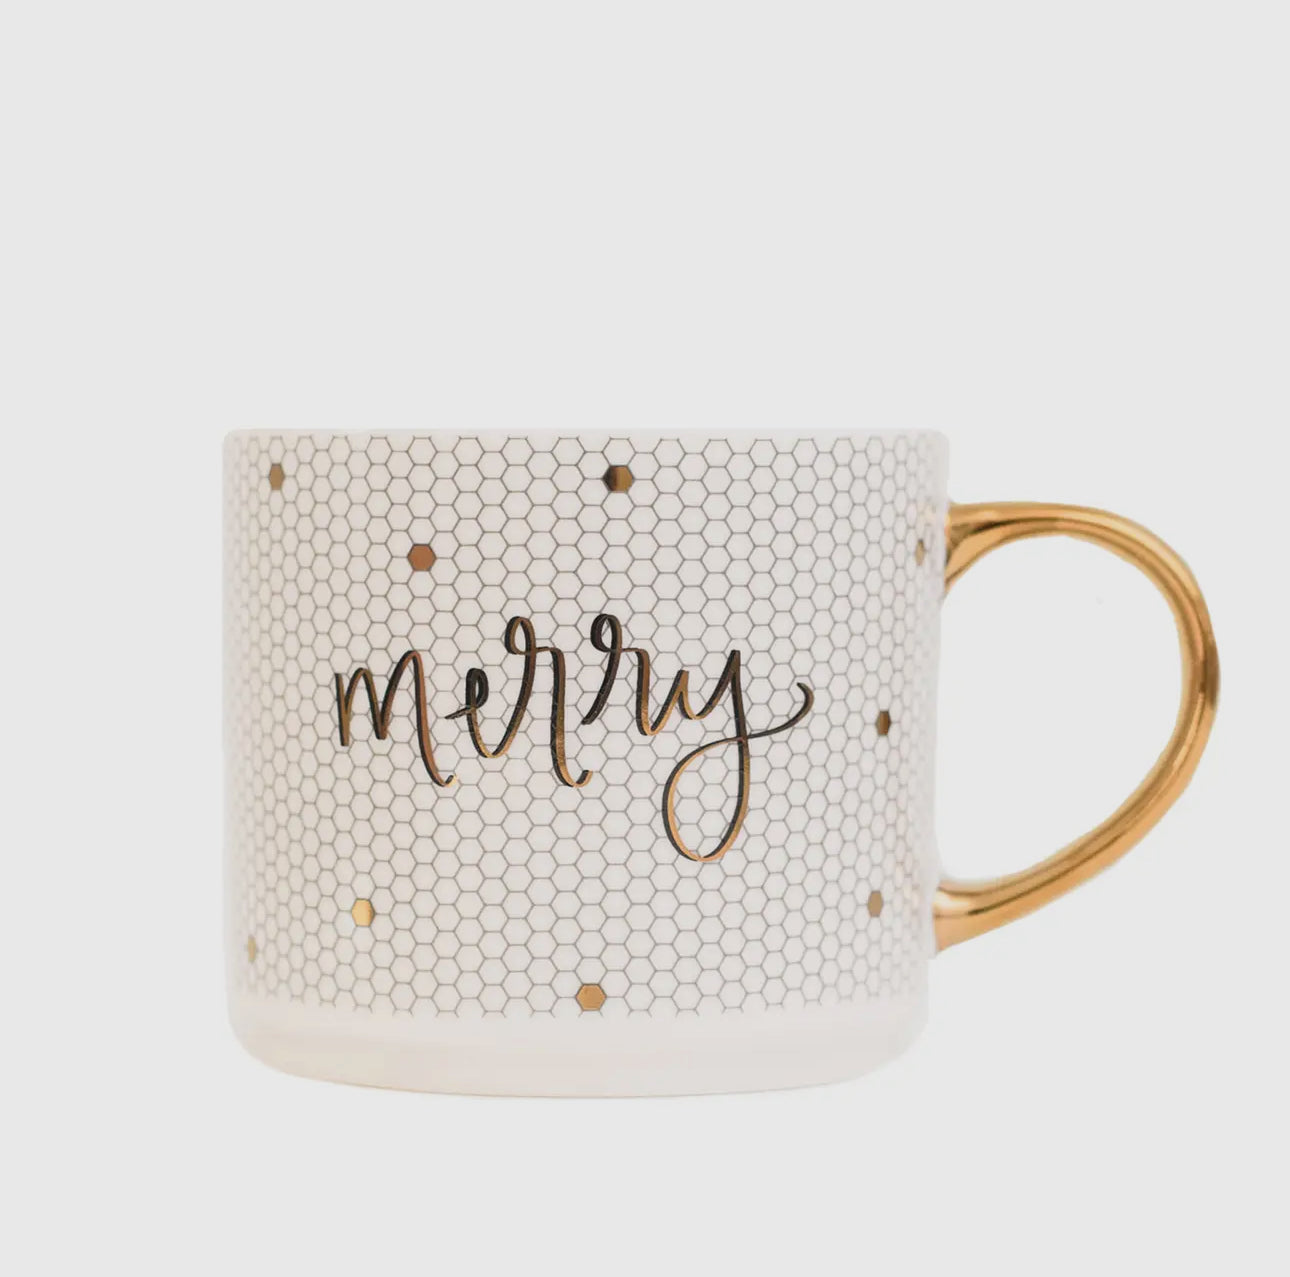 Merry Gold Tile Mug